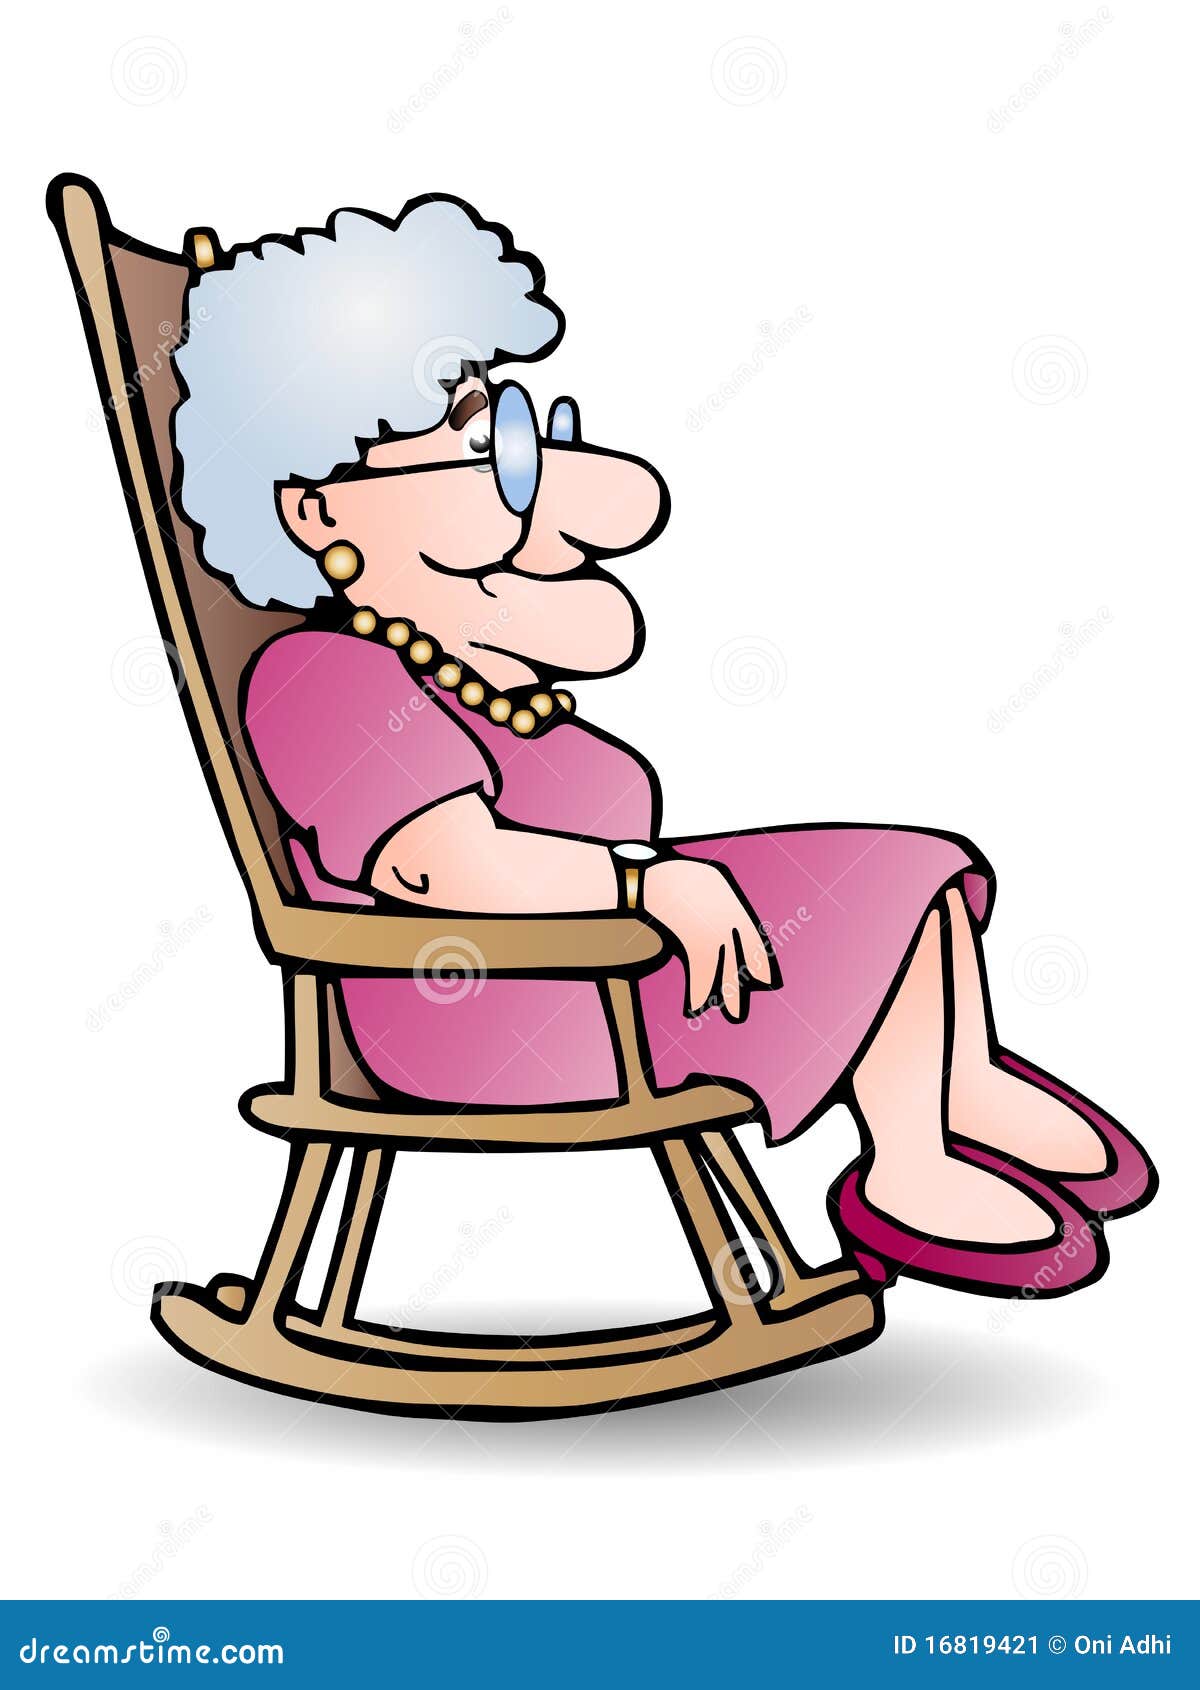 Grandmother Sit On Shaky Chair Stock Image  Image: 16819421